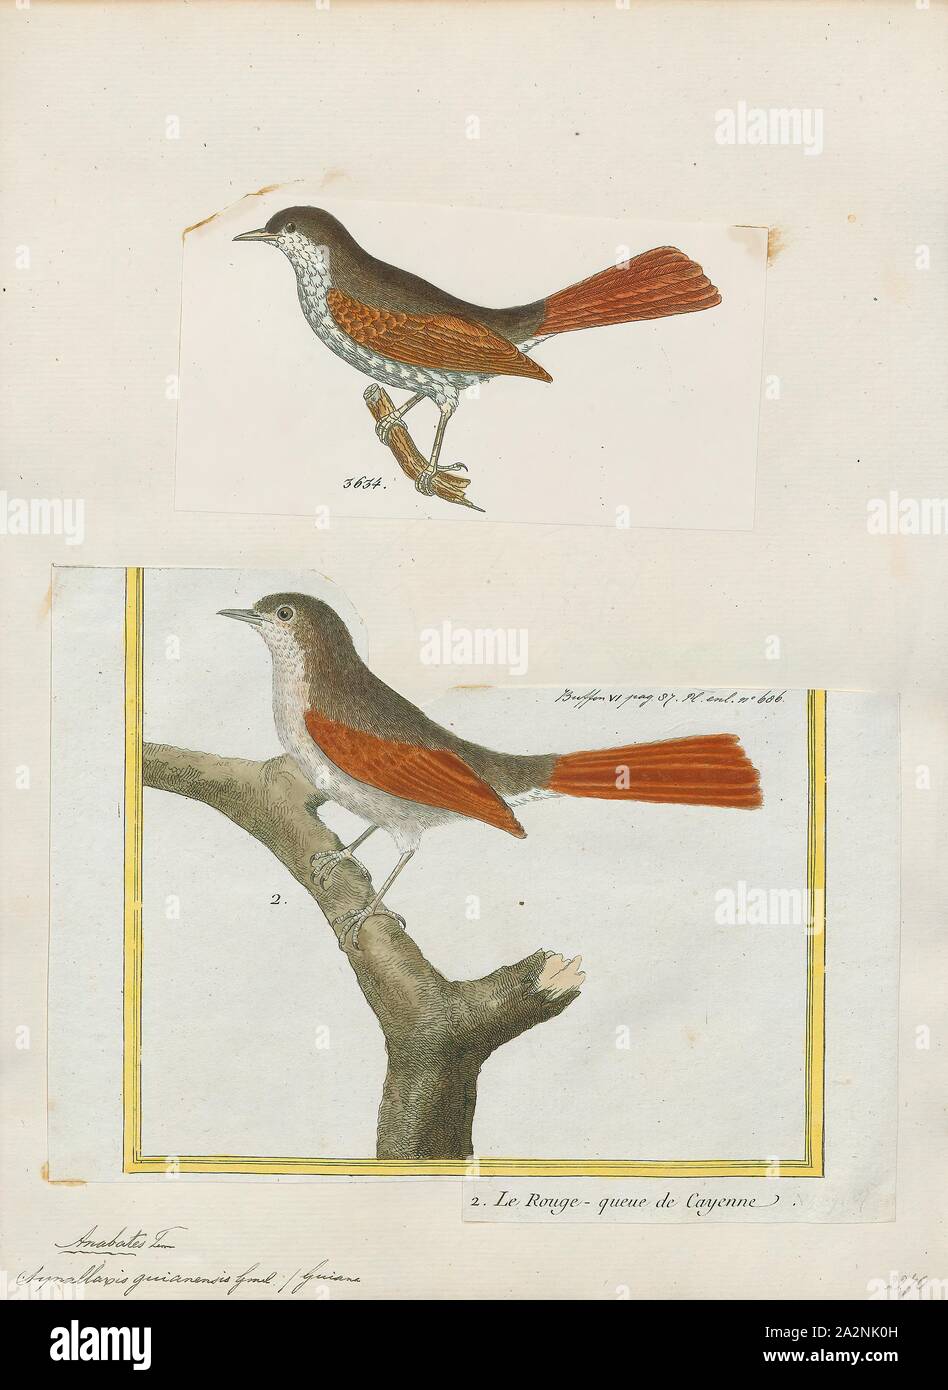 Synallaxis guianensis, Print, Synallaxis is a genus of birds in the ovenbird family, Furnariidae., 1700-1880 Stock Photo